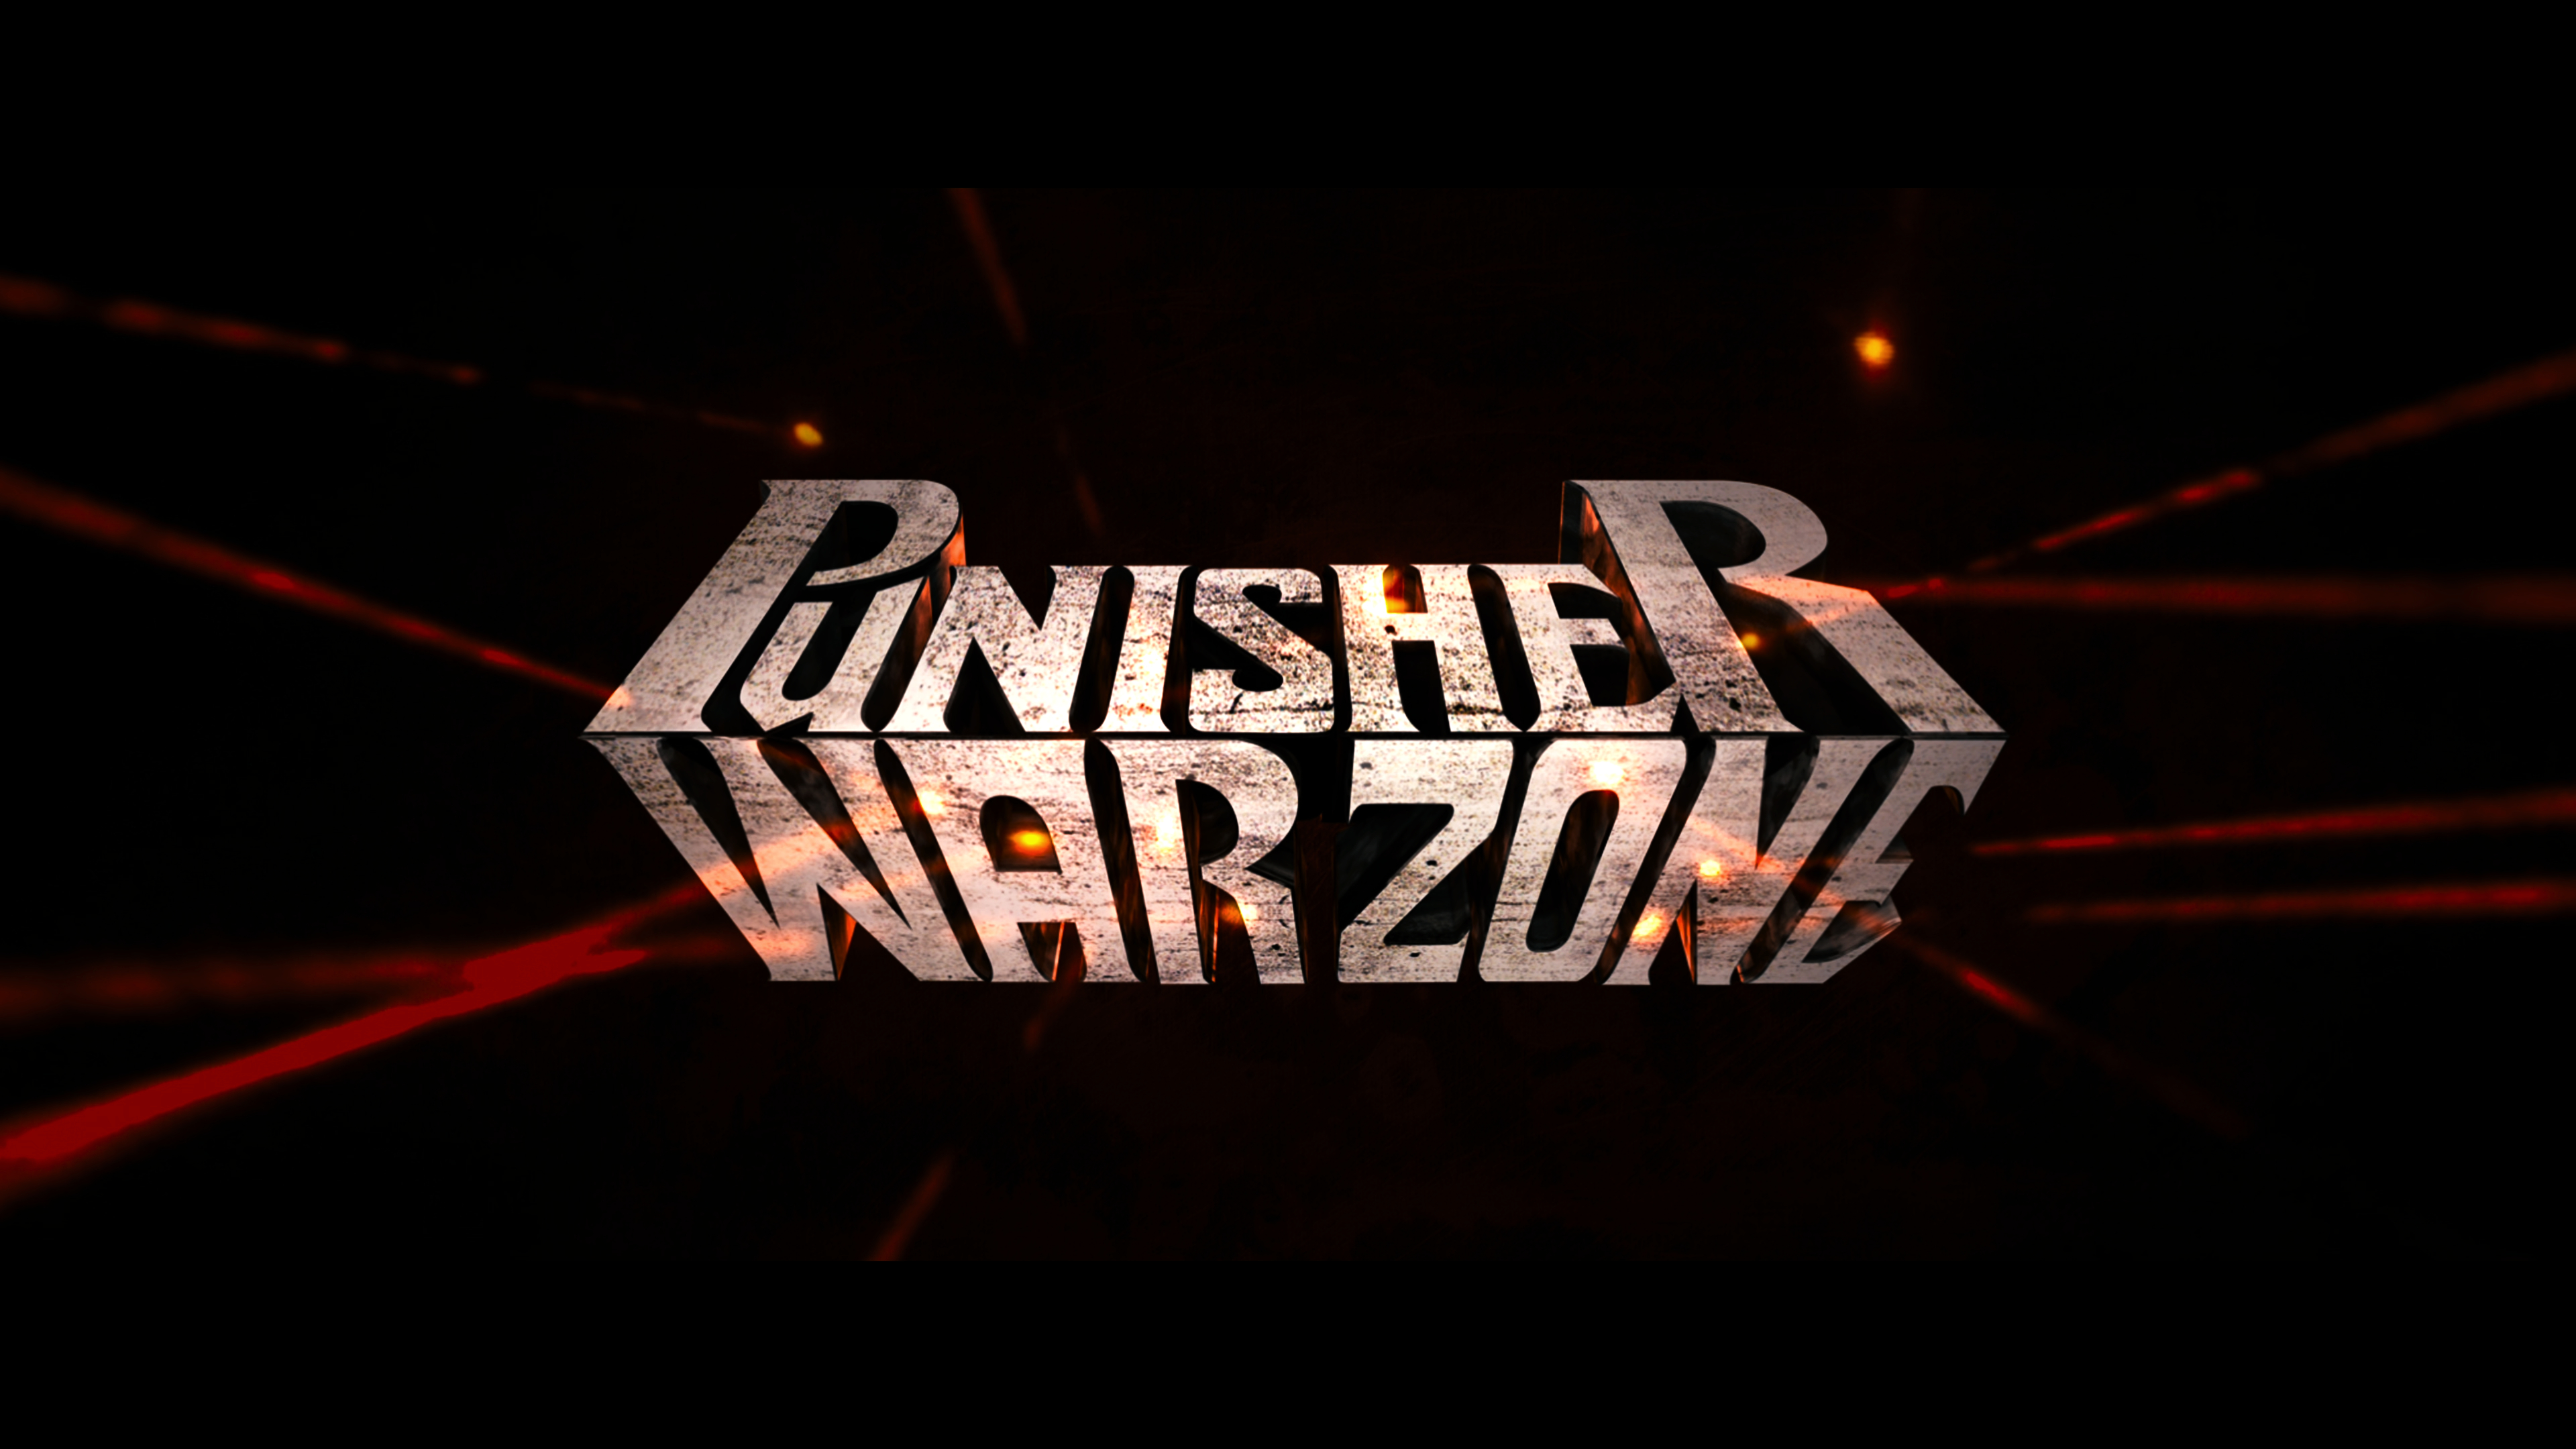 Punisher: War Zone [Includes Digital Copy] [4K Ultra HD Blu-ray/Blu-ray]  [Only @ Best Buy] [2008] - Best Buy